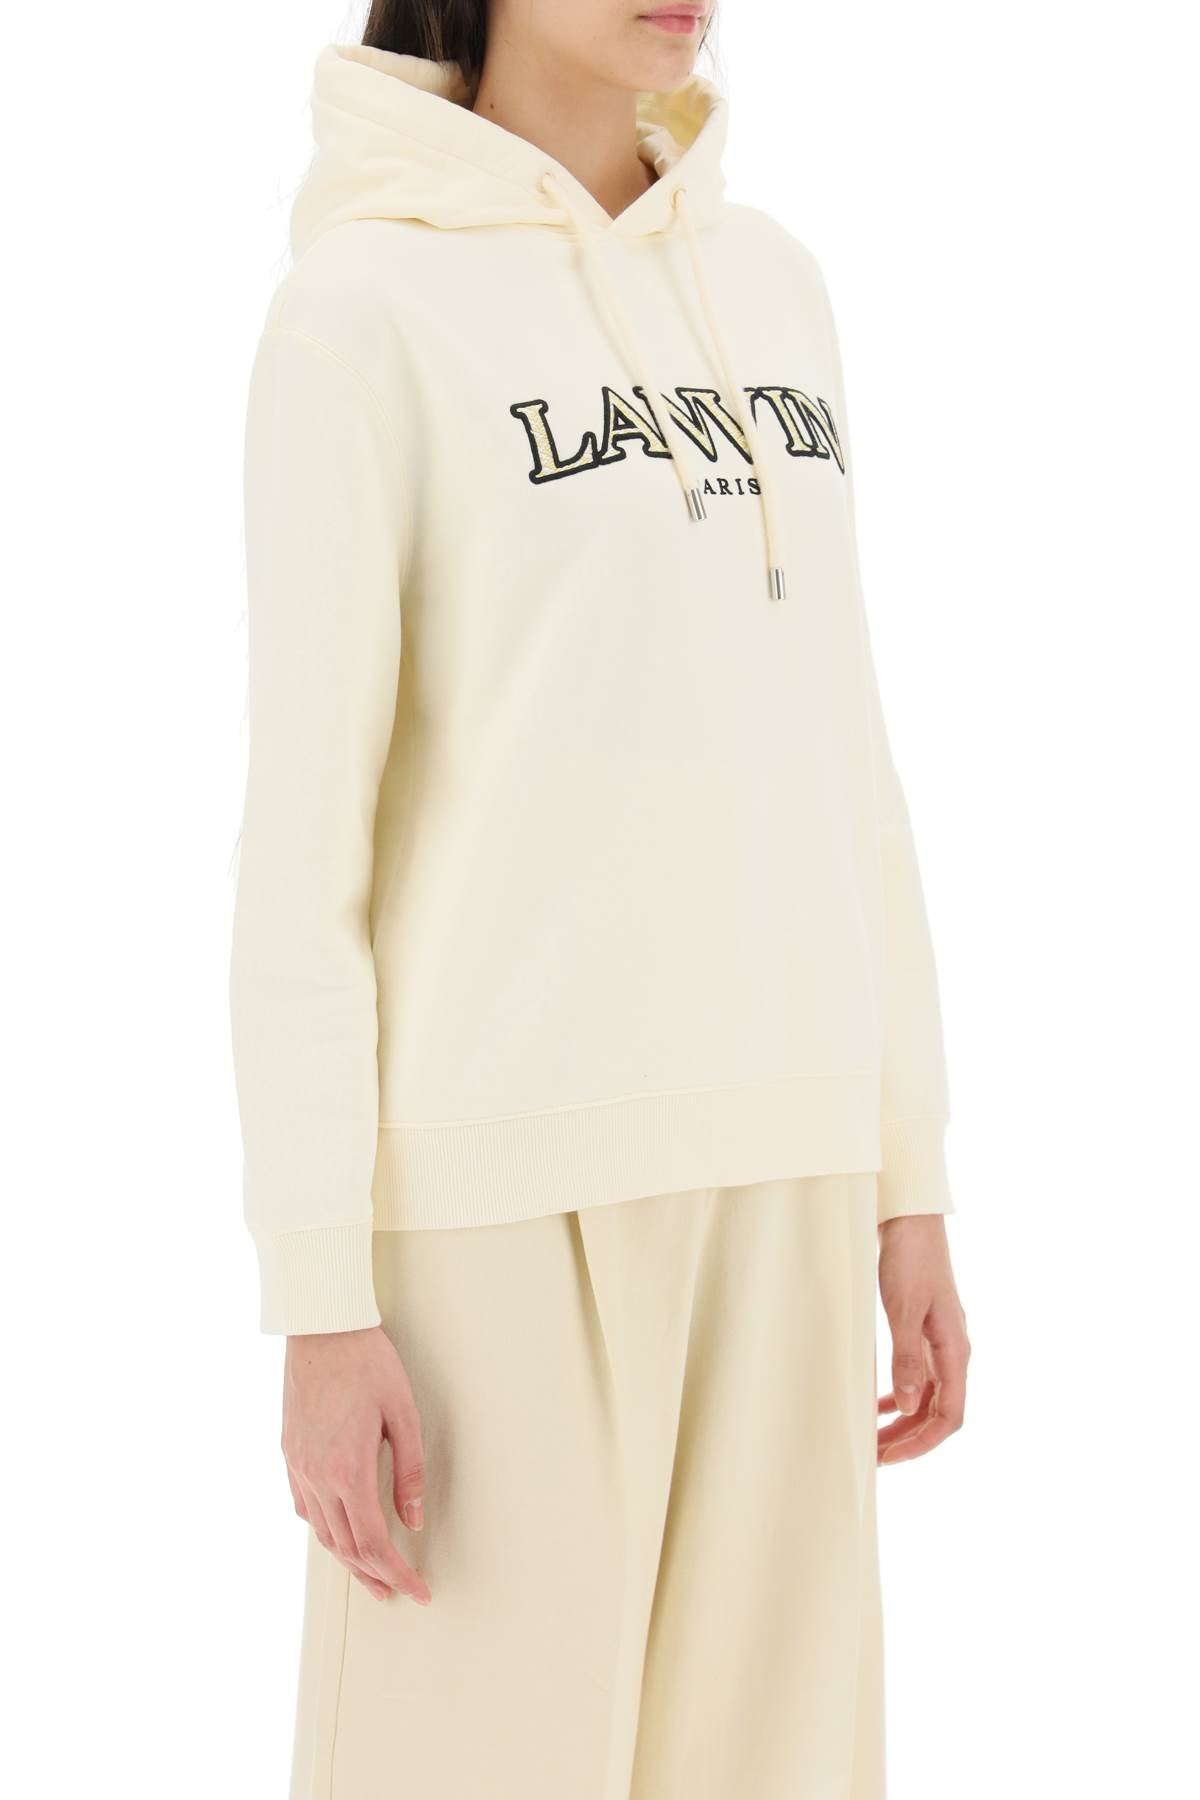 Lanvin curb logo hoodie-1